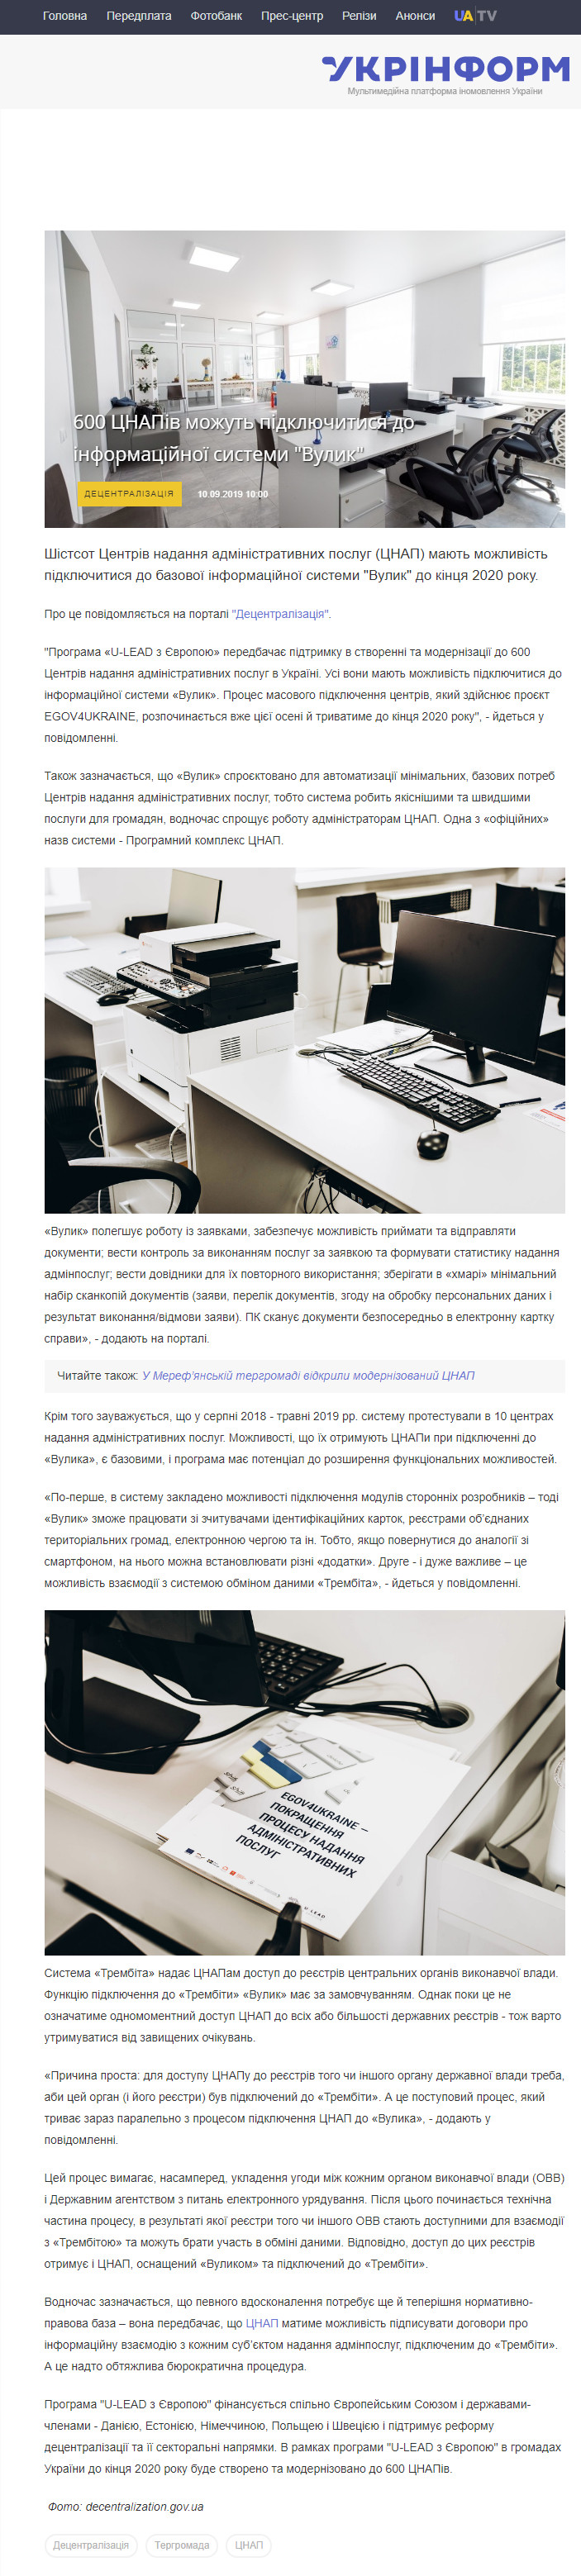 https://www.ukrinform.ua/rubric-regions/2777002-600-cnapiv-mozut-pidklucitisa-do-informacijnoi-sistemi-vulik.html